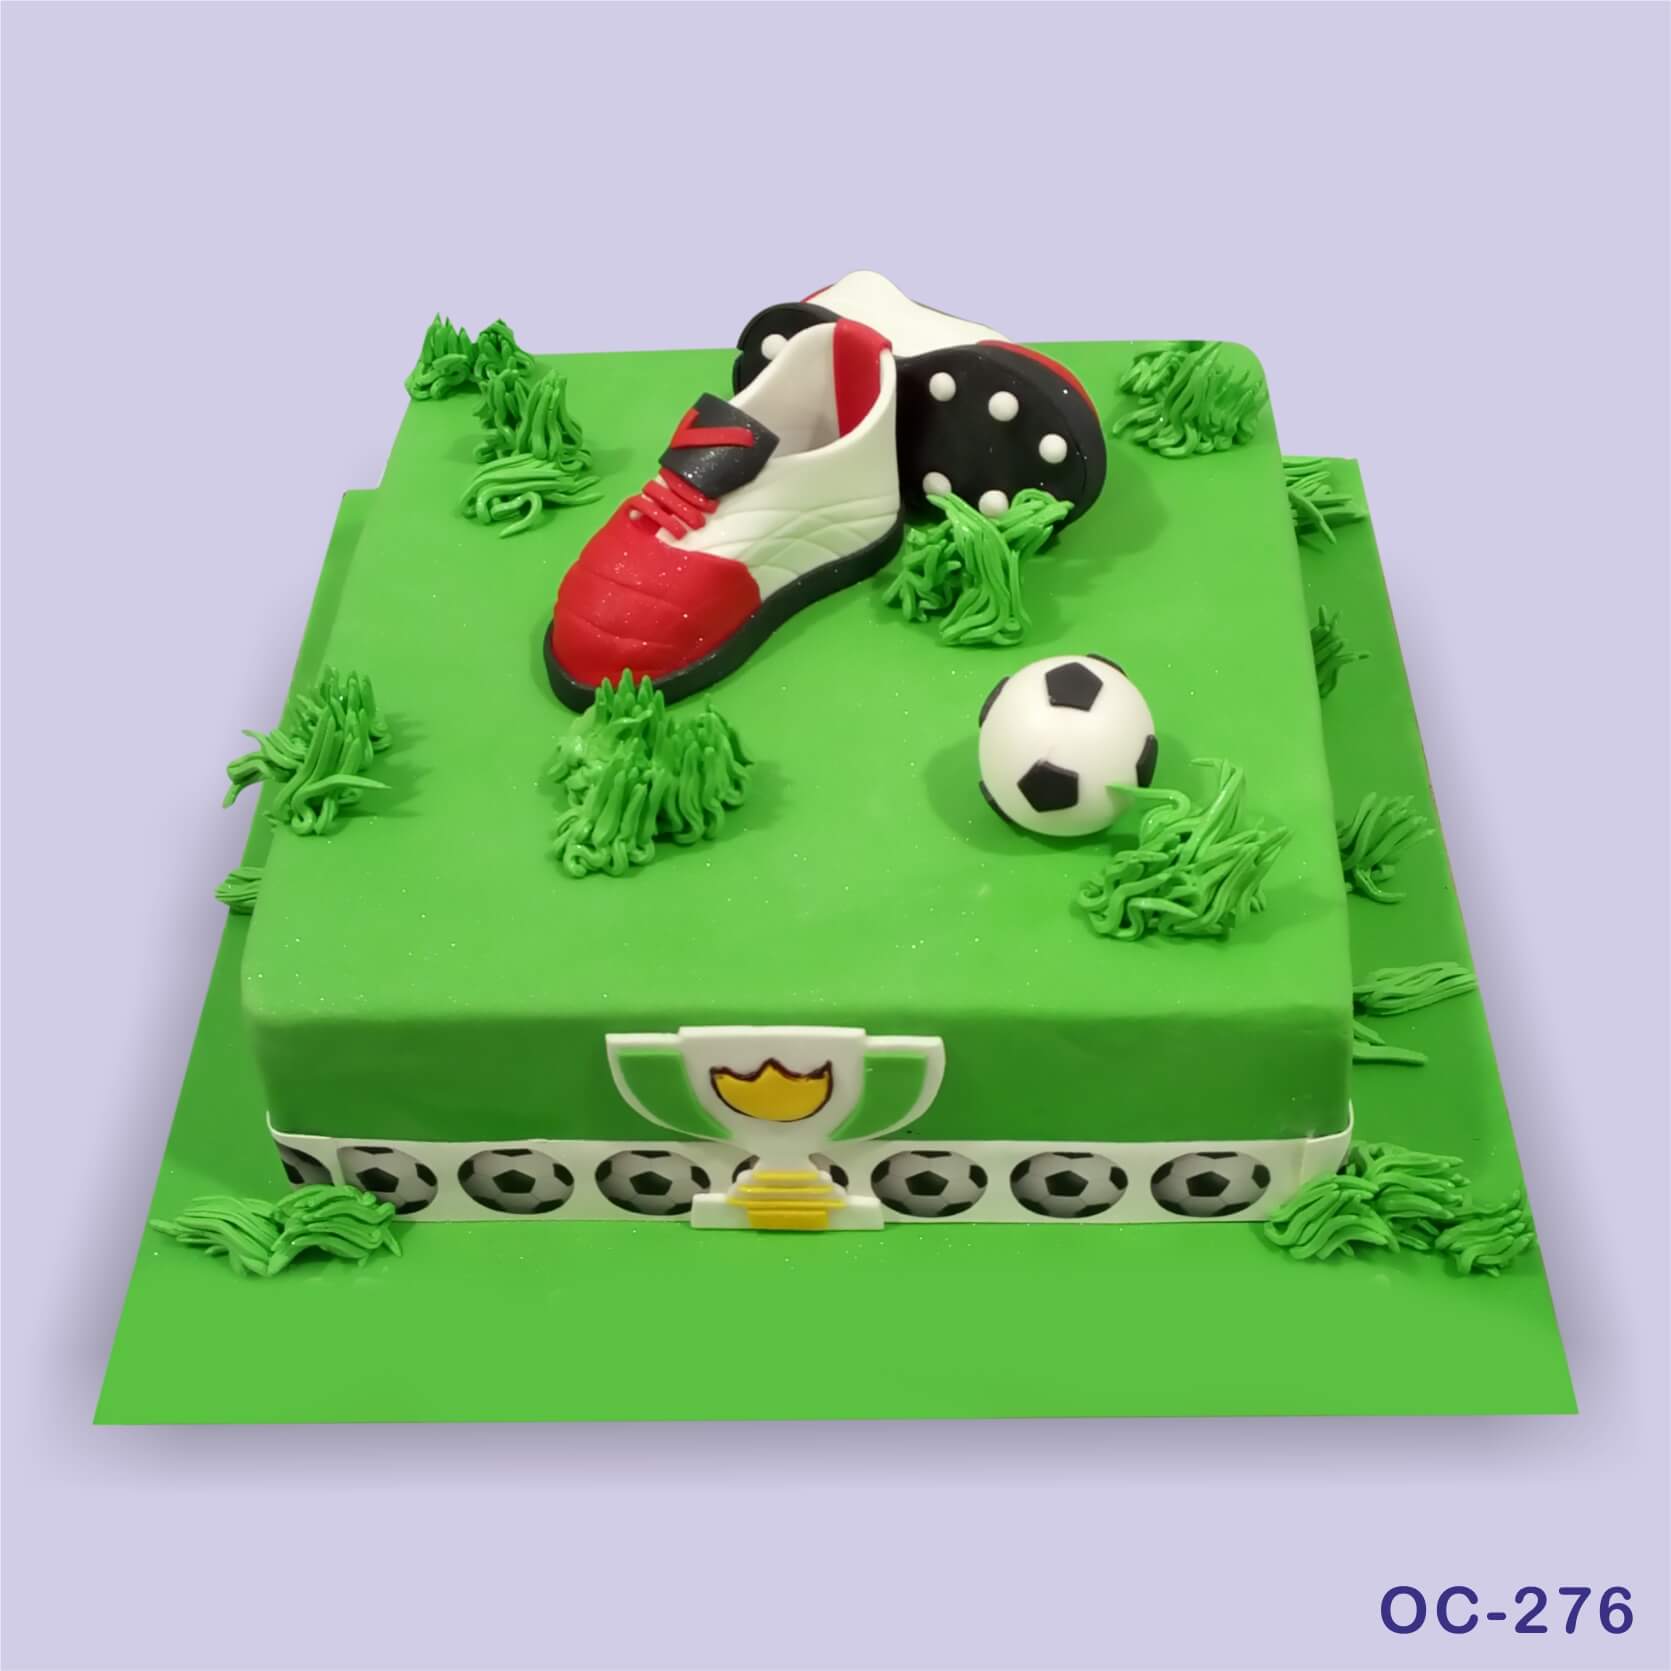 Football Game Cake